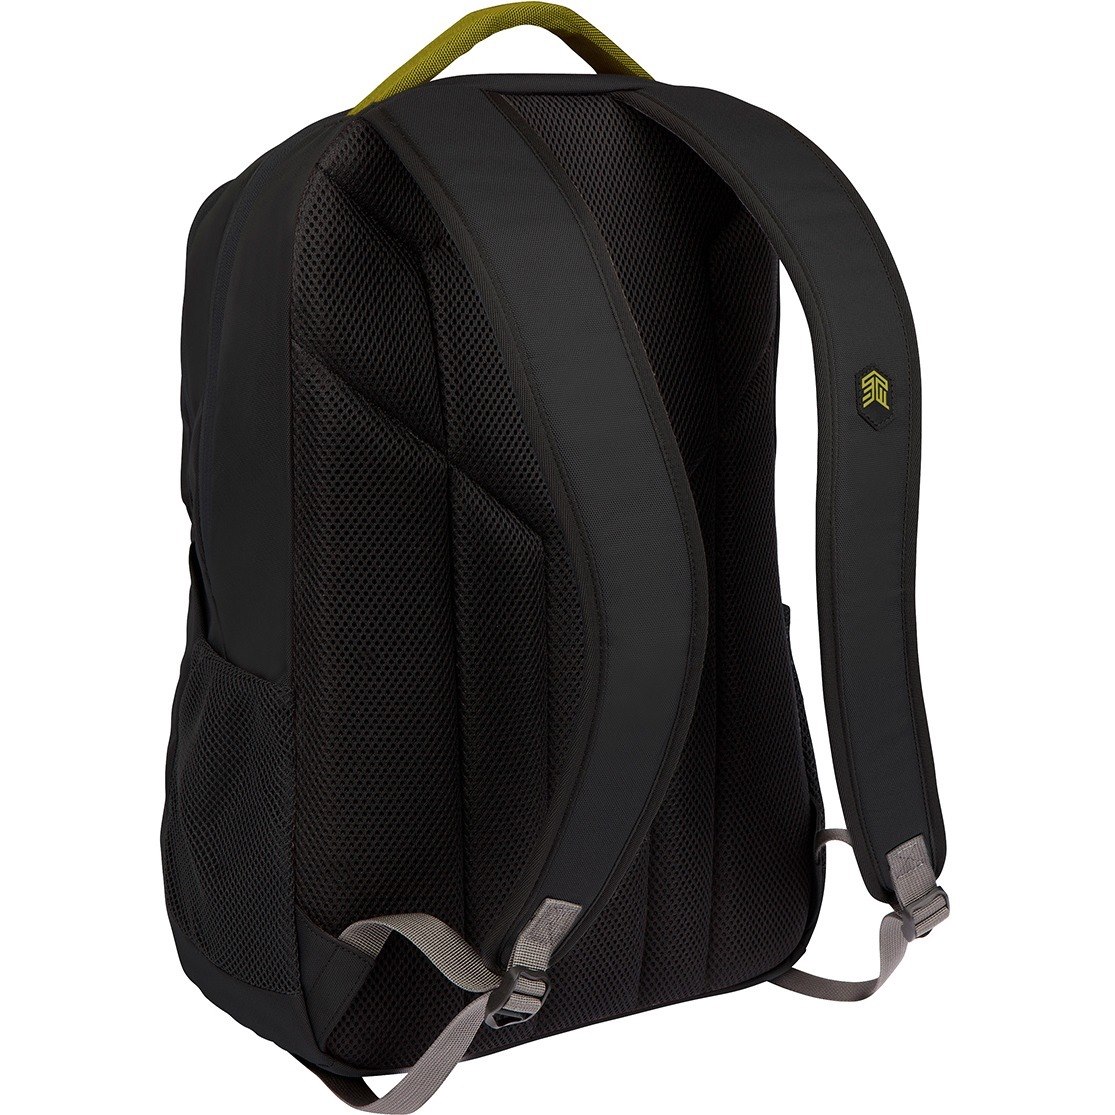 STM Goods Trilogy Backpack - Fits Up To 15" Laptop - Black - Retail